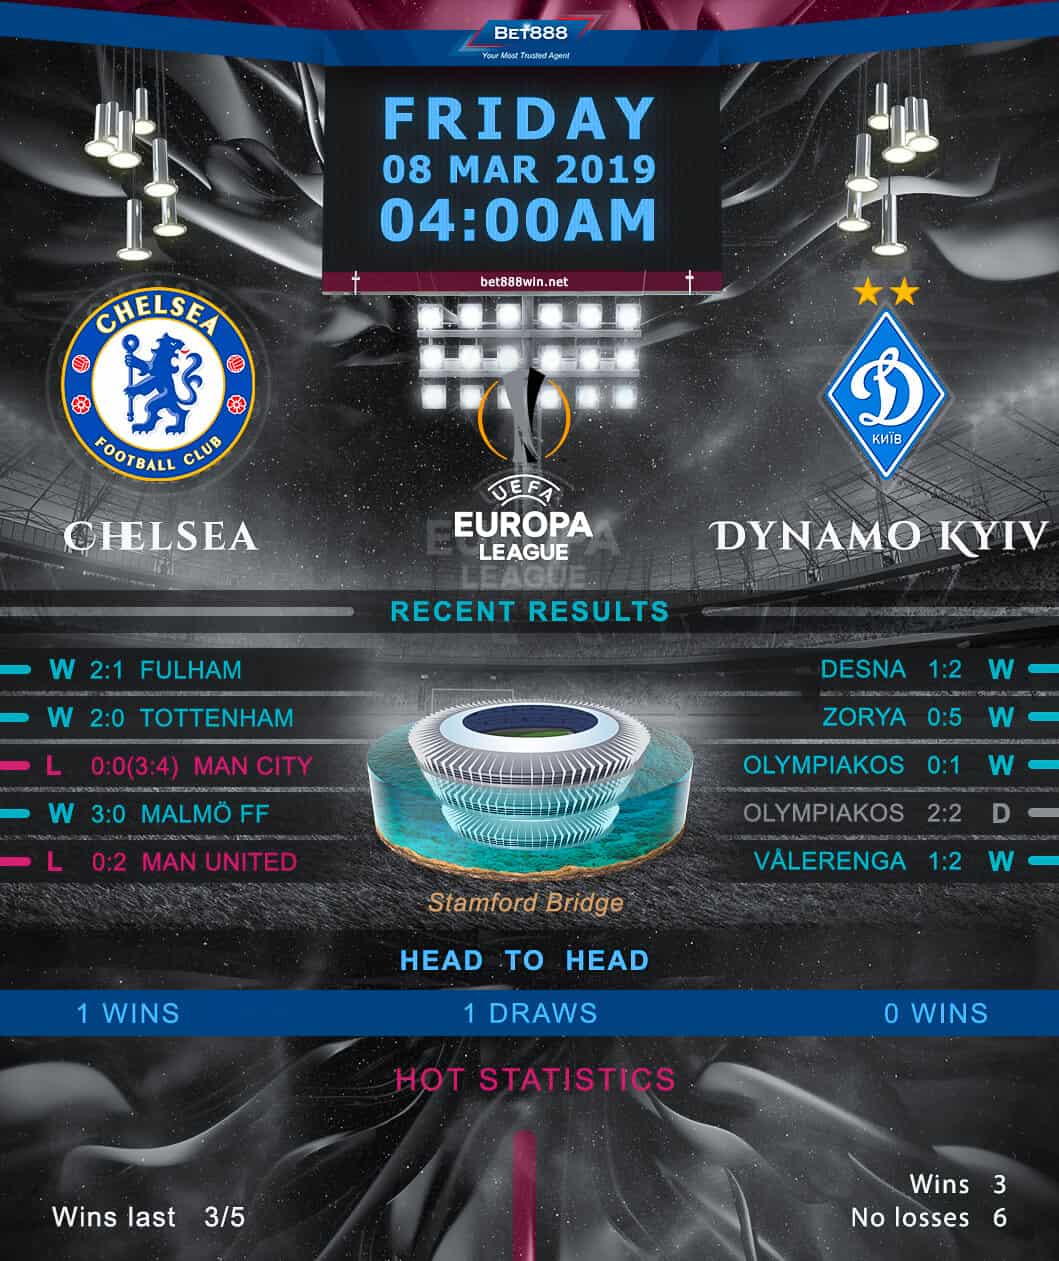 Chelsea vs Dynamo Kyiv 08/03/19